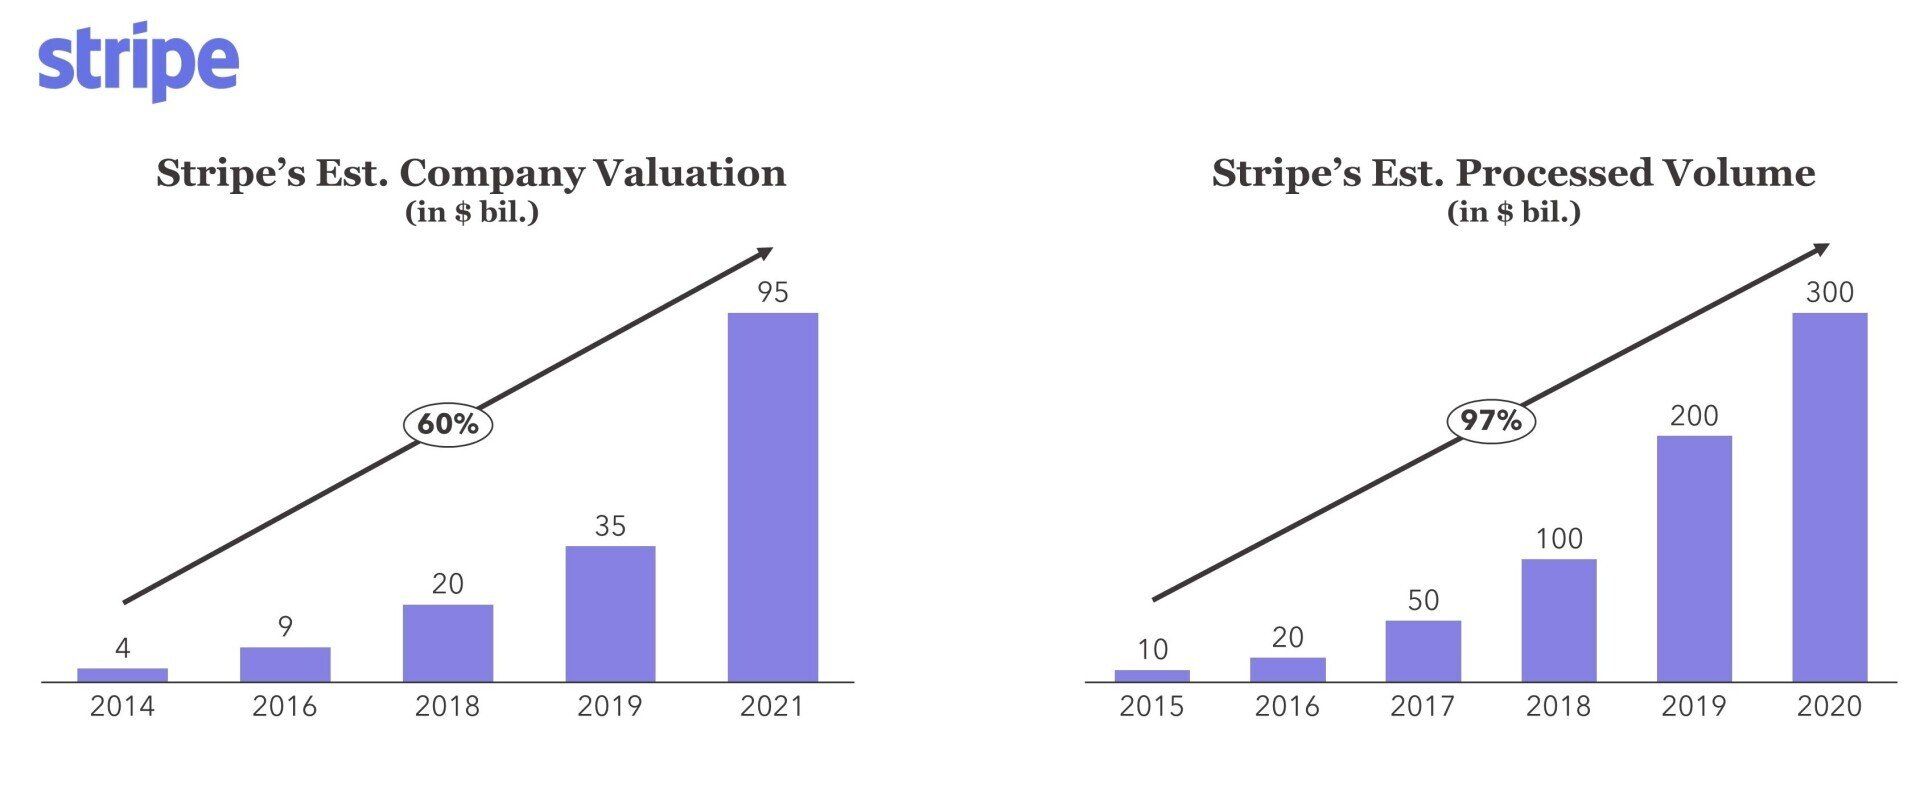   FIGURE 1: Estimated Stripe Processed Volume and Market Capitalization